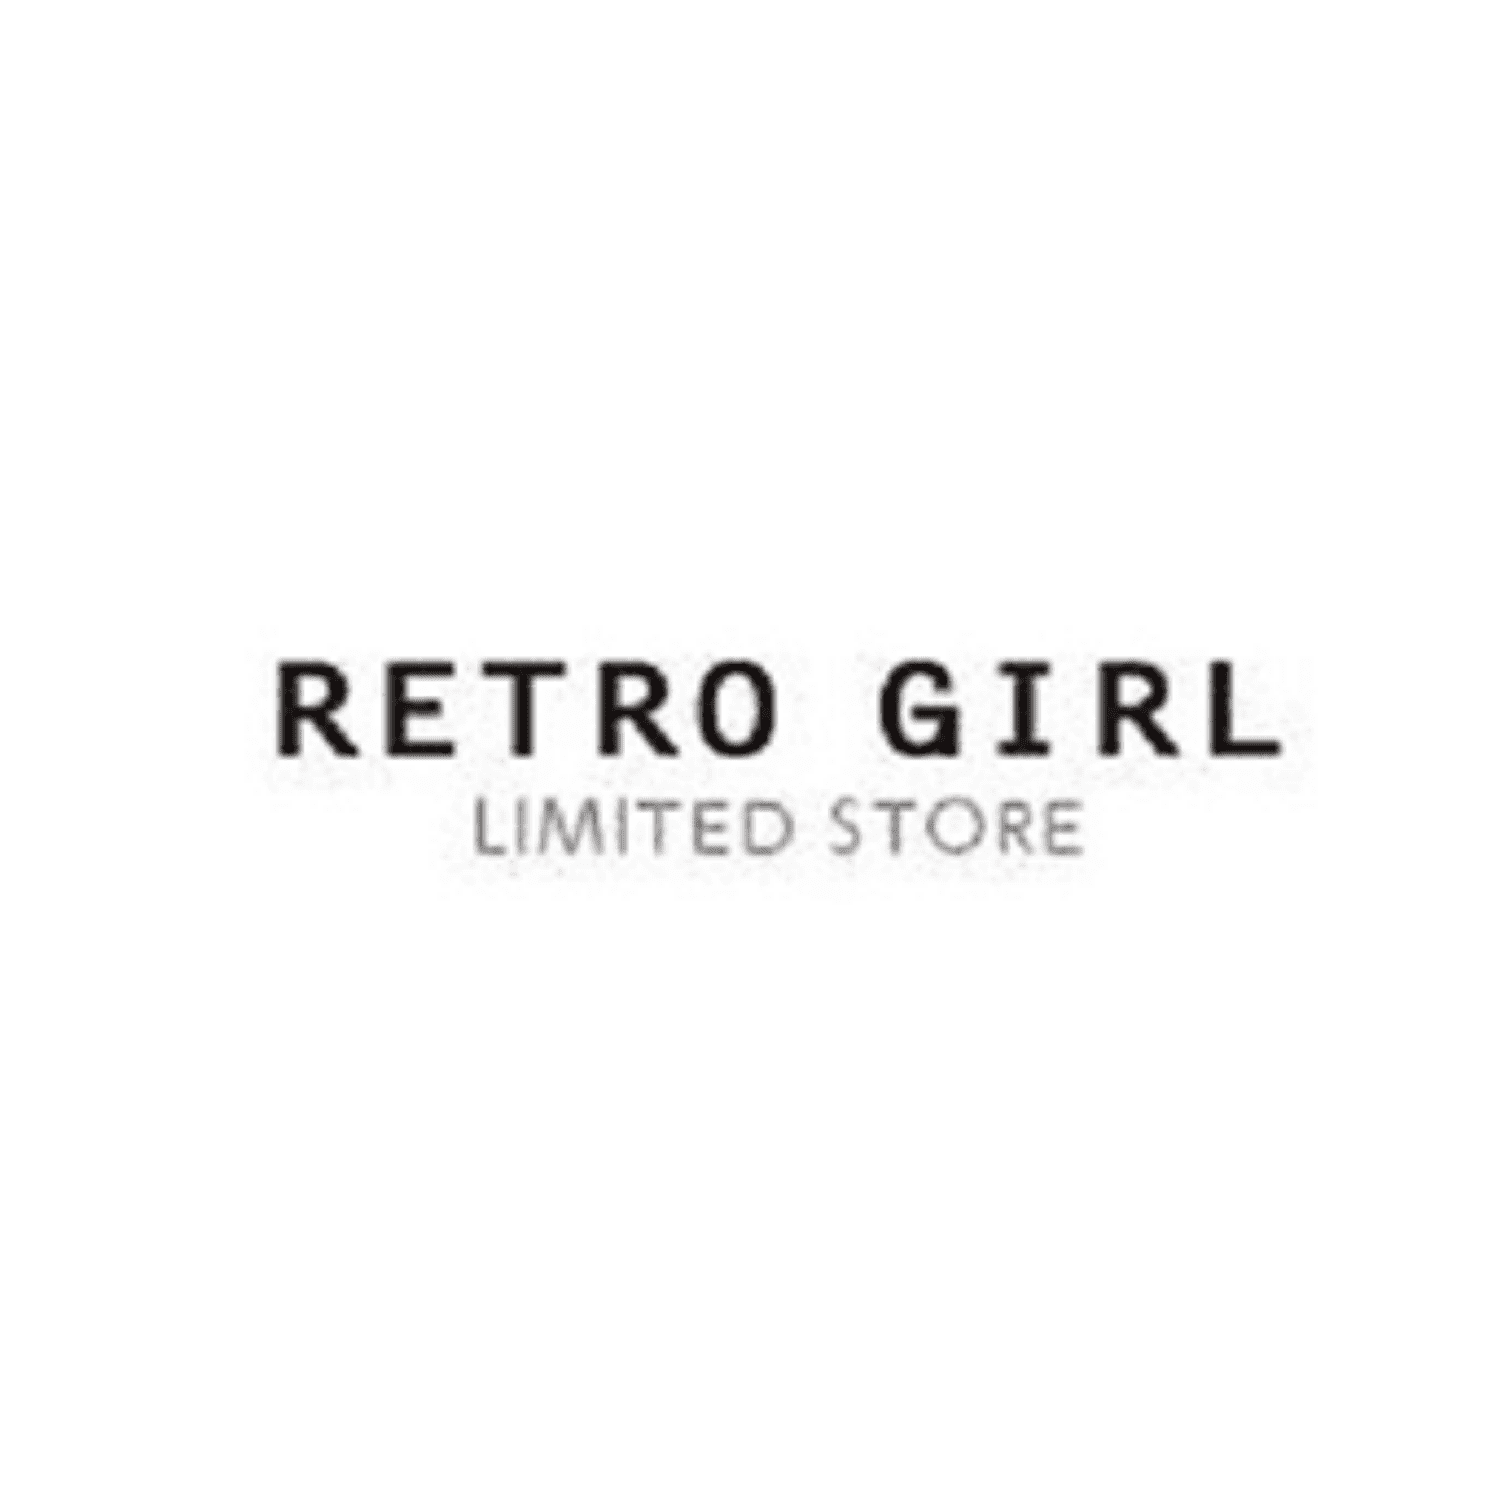 RETORO GIRL Limited Store